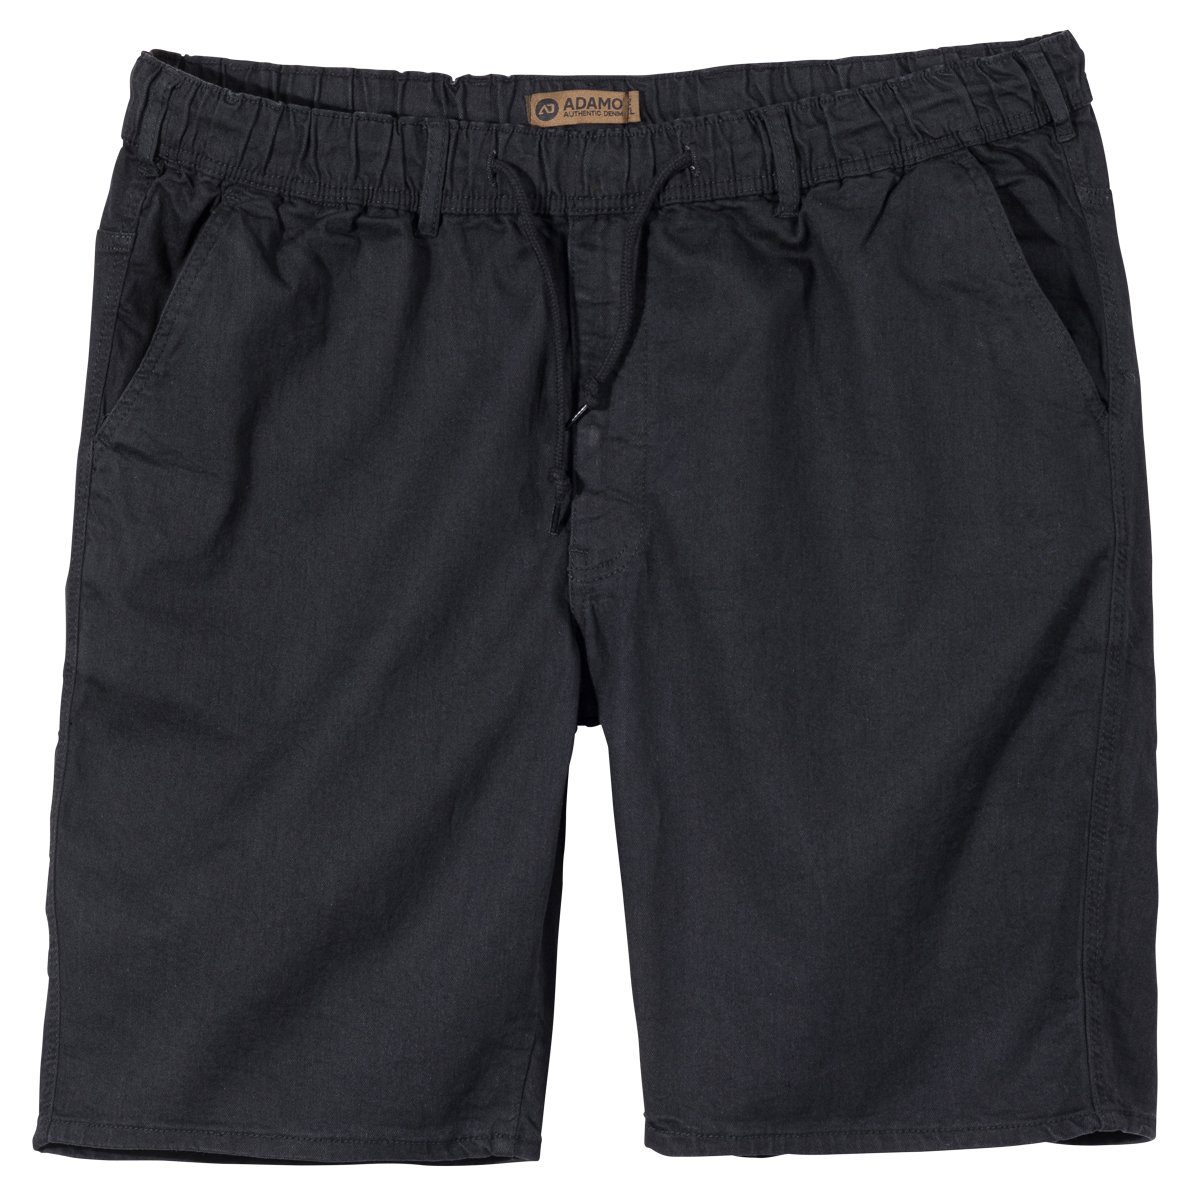 ADAMO Shorts Große Größen Stretch-Shorts schwarz Kansas Adamo | Shorts